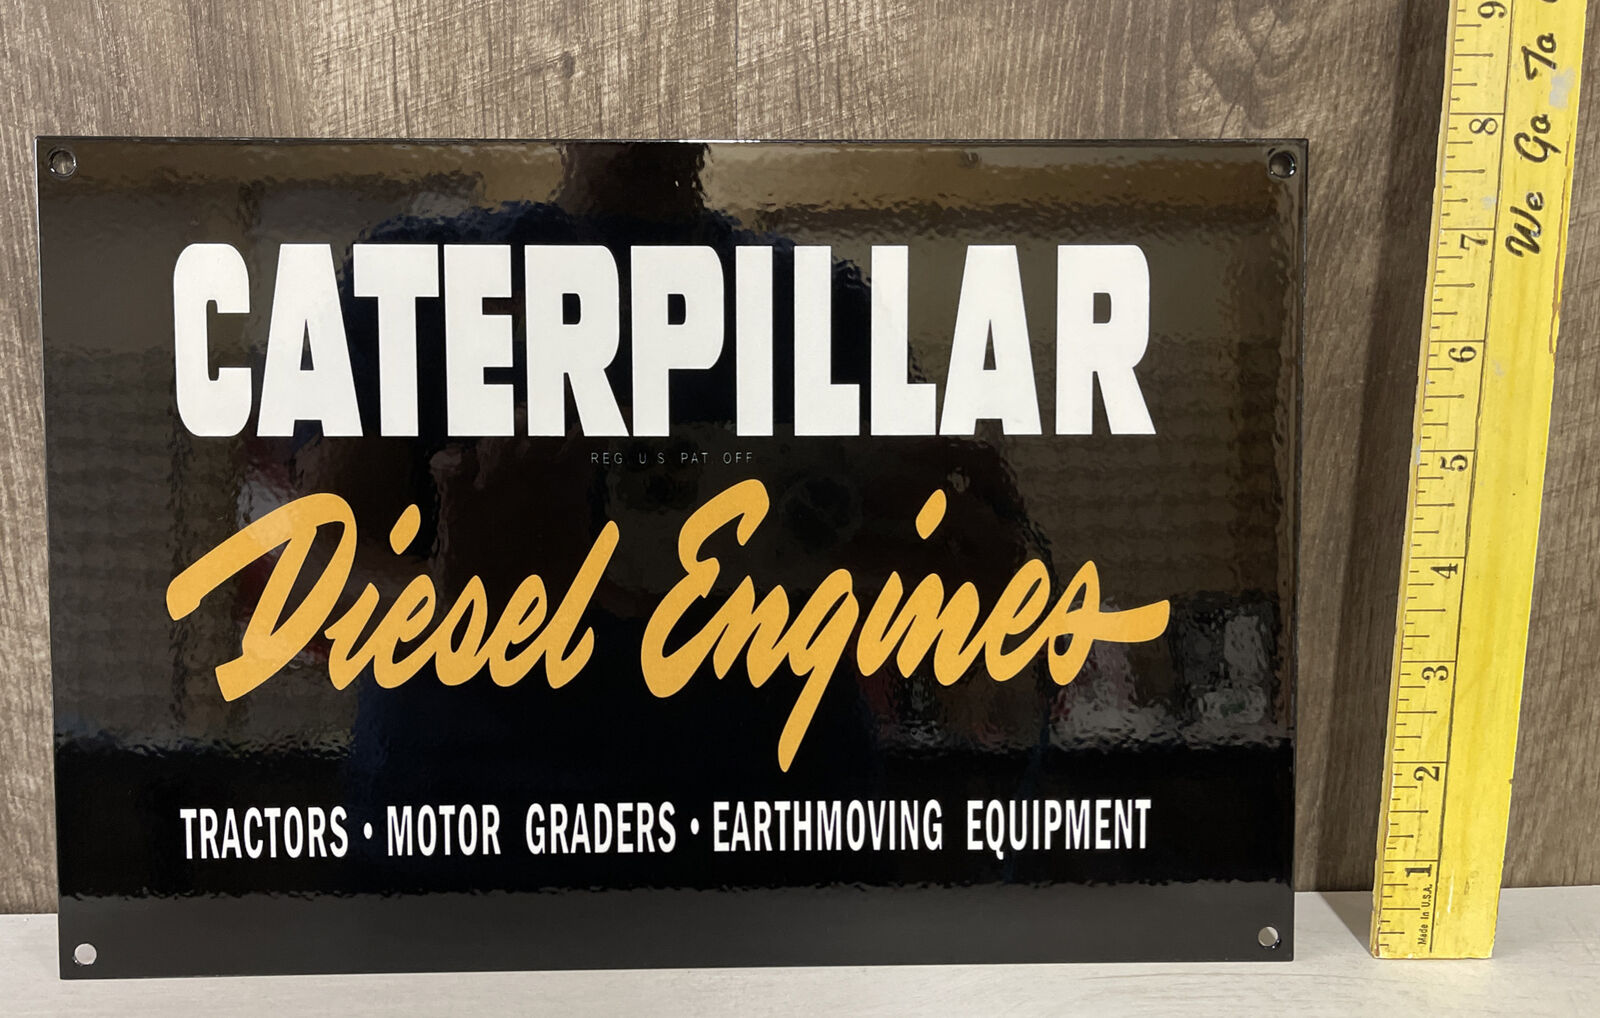 Caterpillar Farm Tractors Metal Sign Diesel Engines Equipment Motor Gas Oil